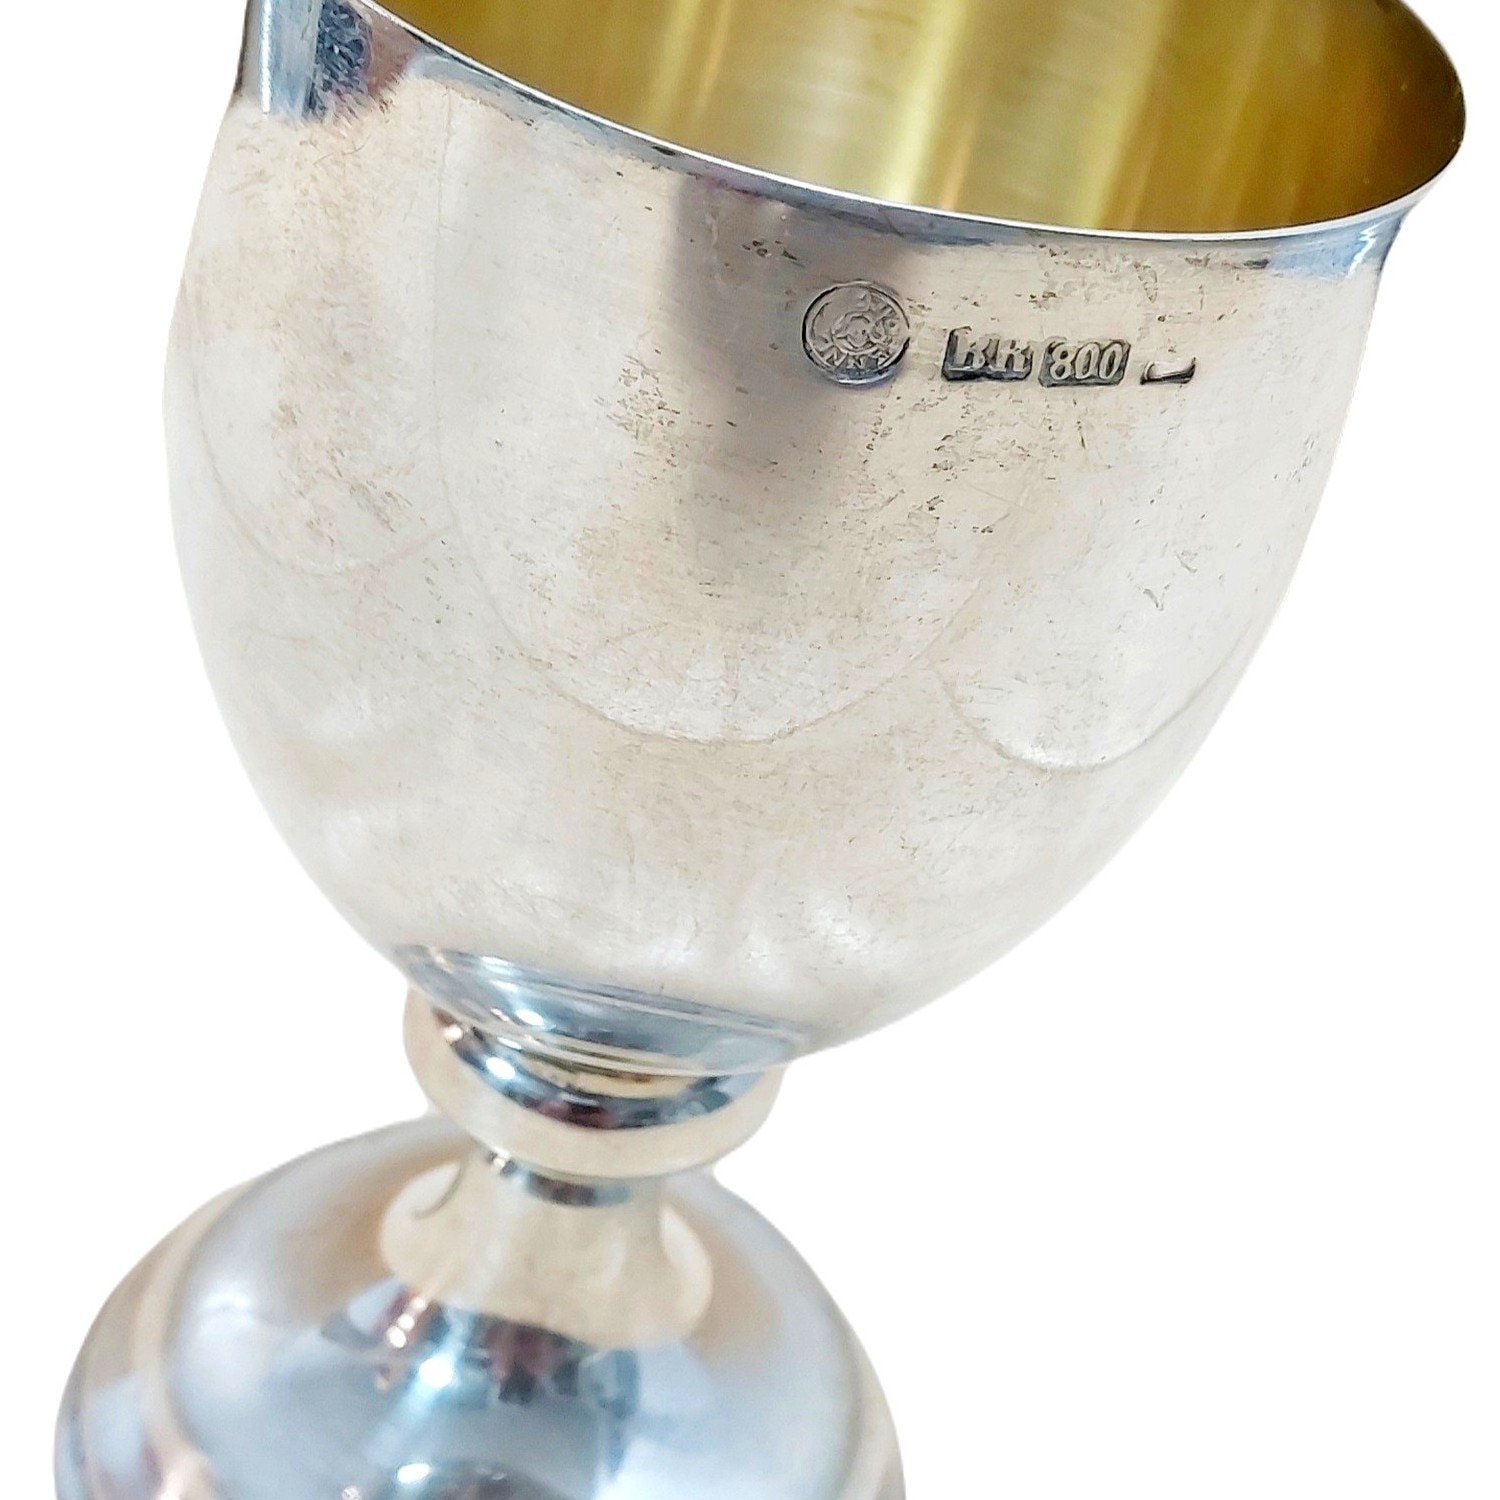 Depletion Obedient Assumption Pahar din argint masiv aurit Brandimarte, 200ml - eMAG.ro